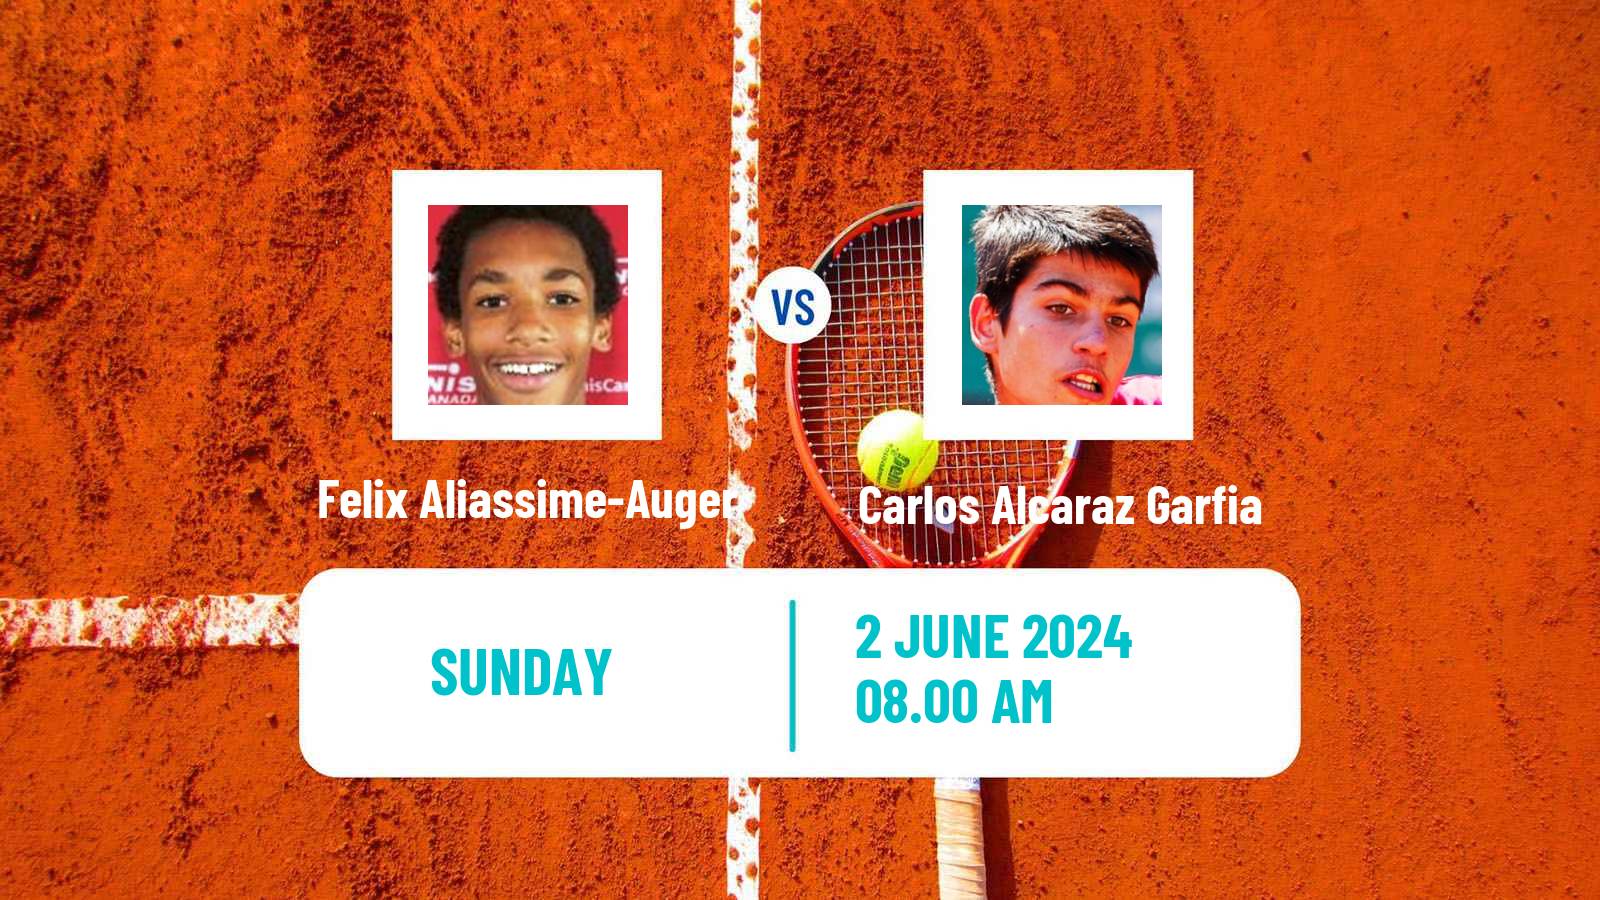 Tennis ATP Roland Garros Felix Aliassime-Auger - Carlos Alcaraz Garfia